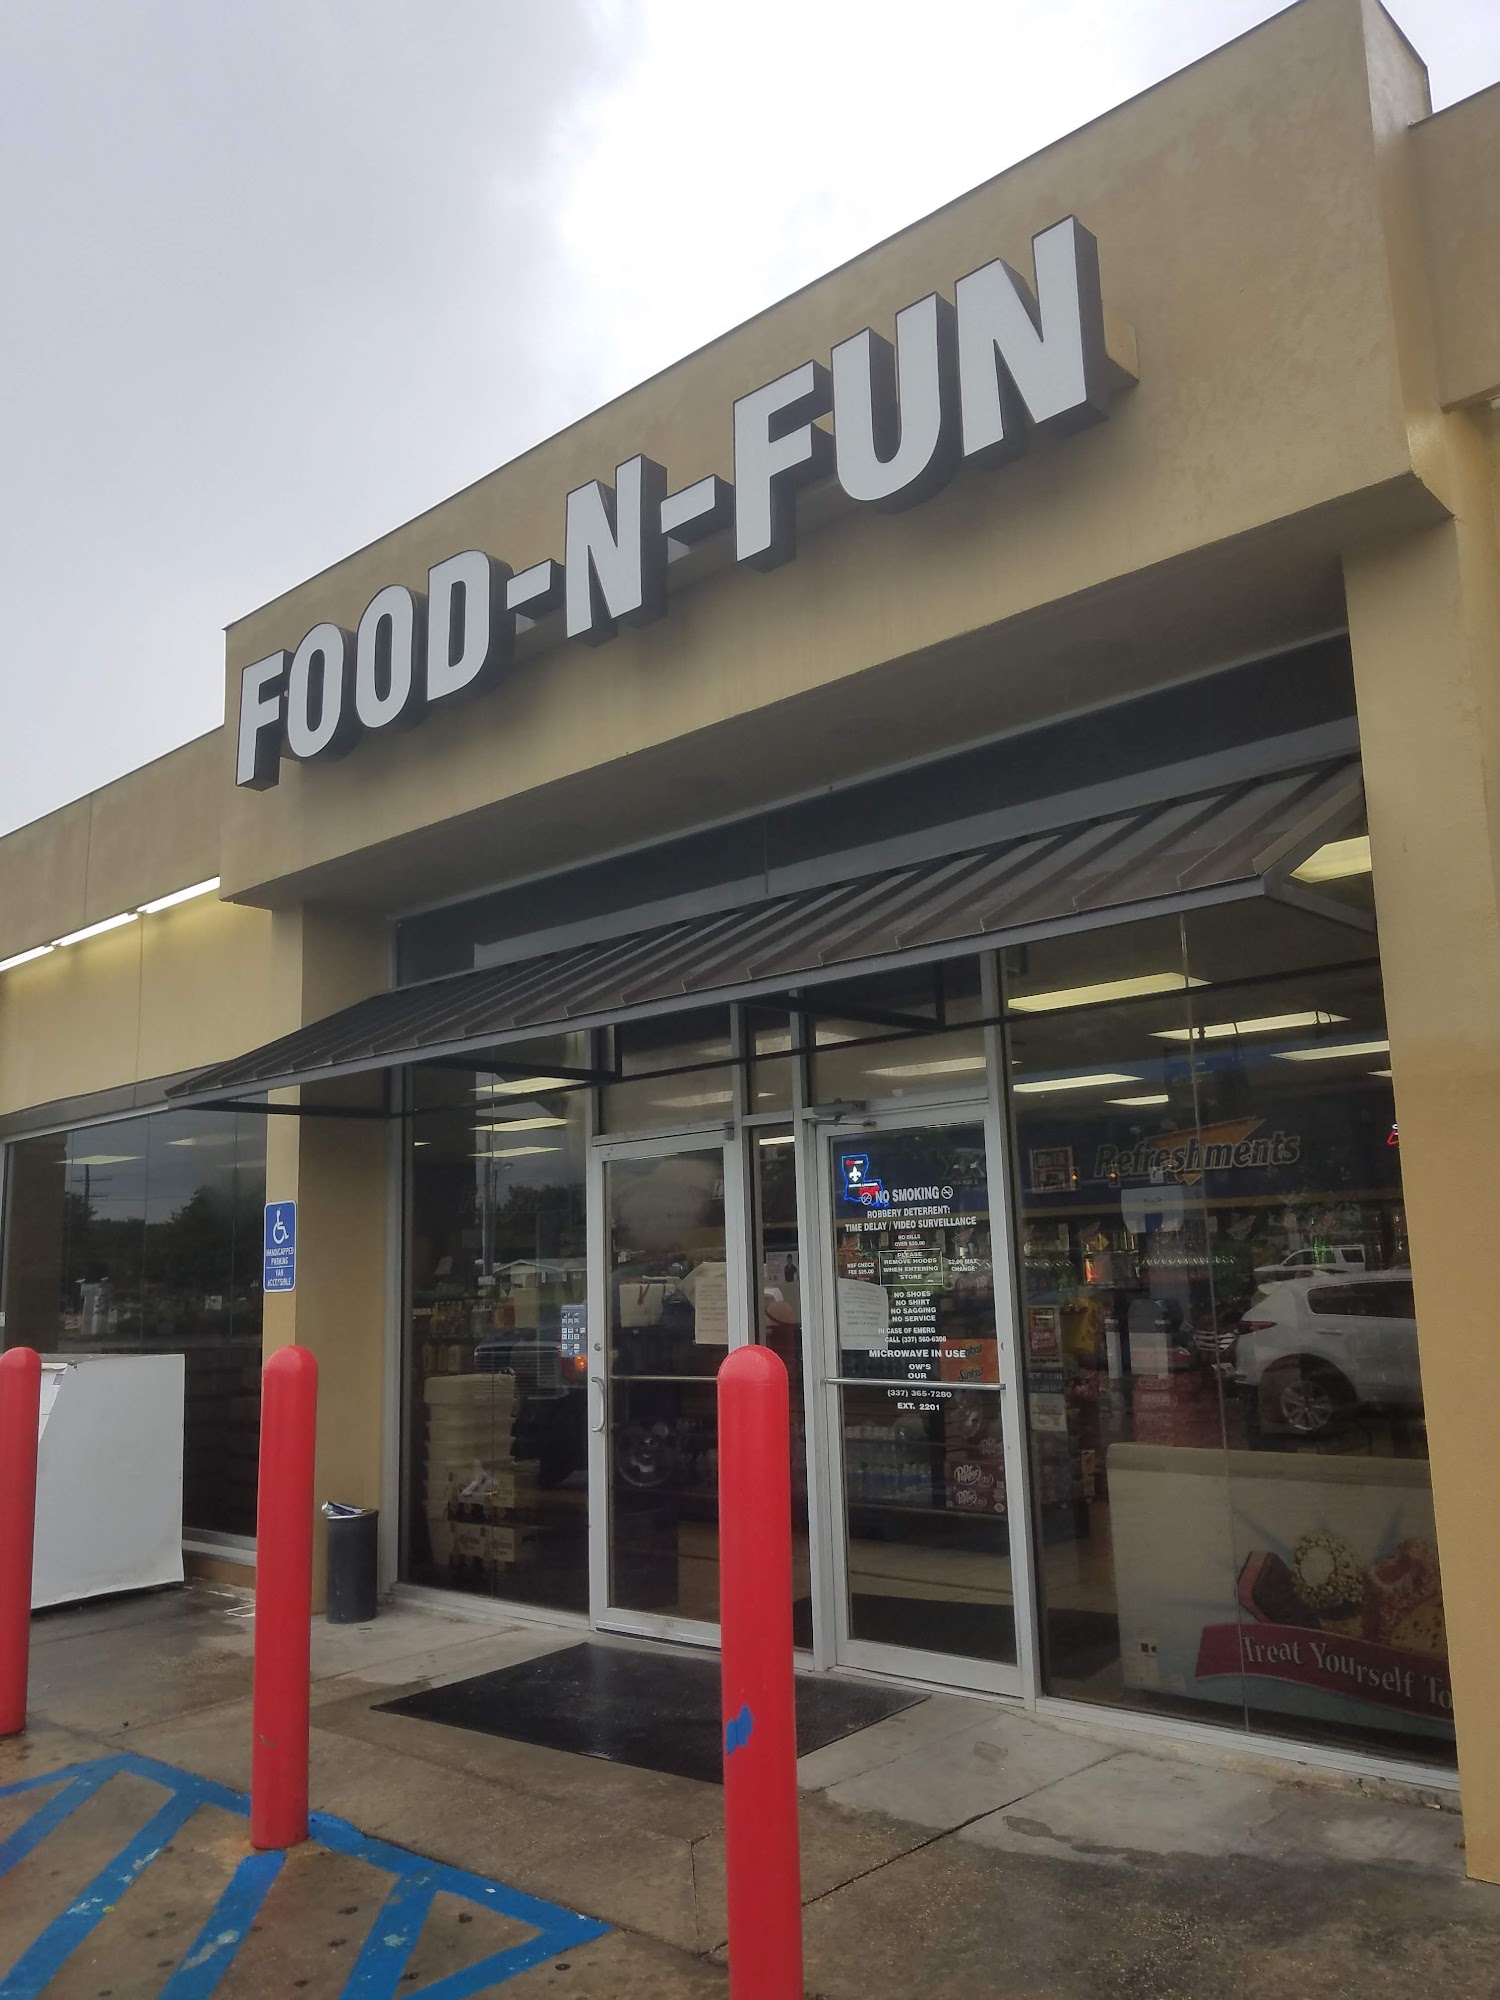 Food-N-Fun